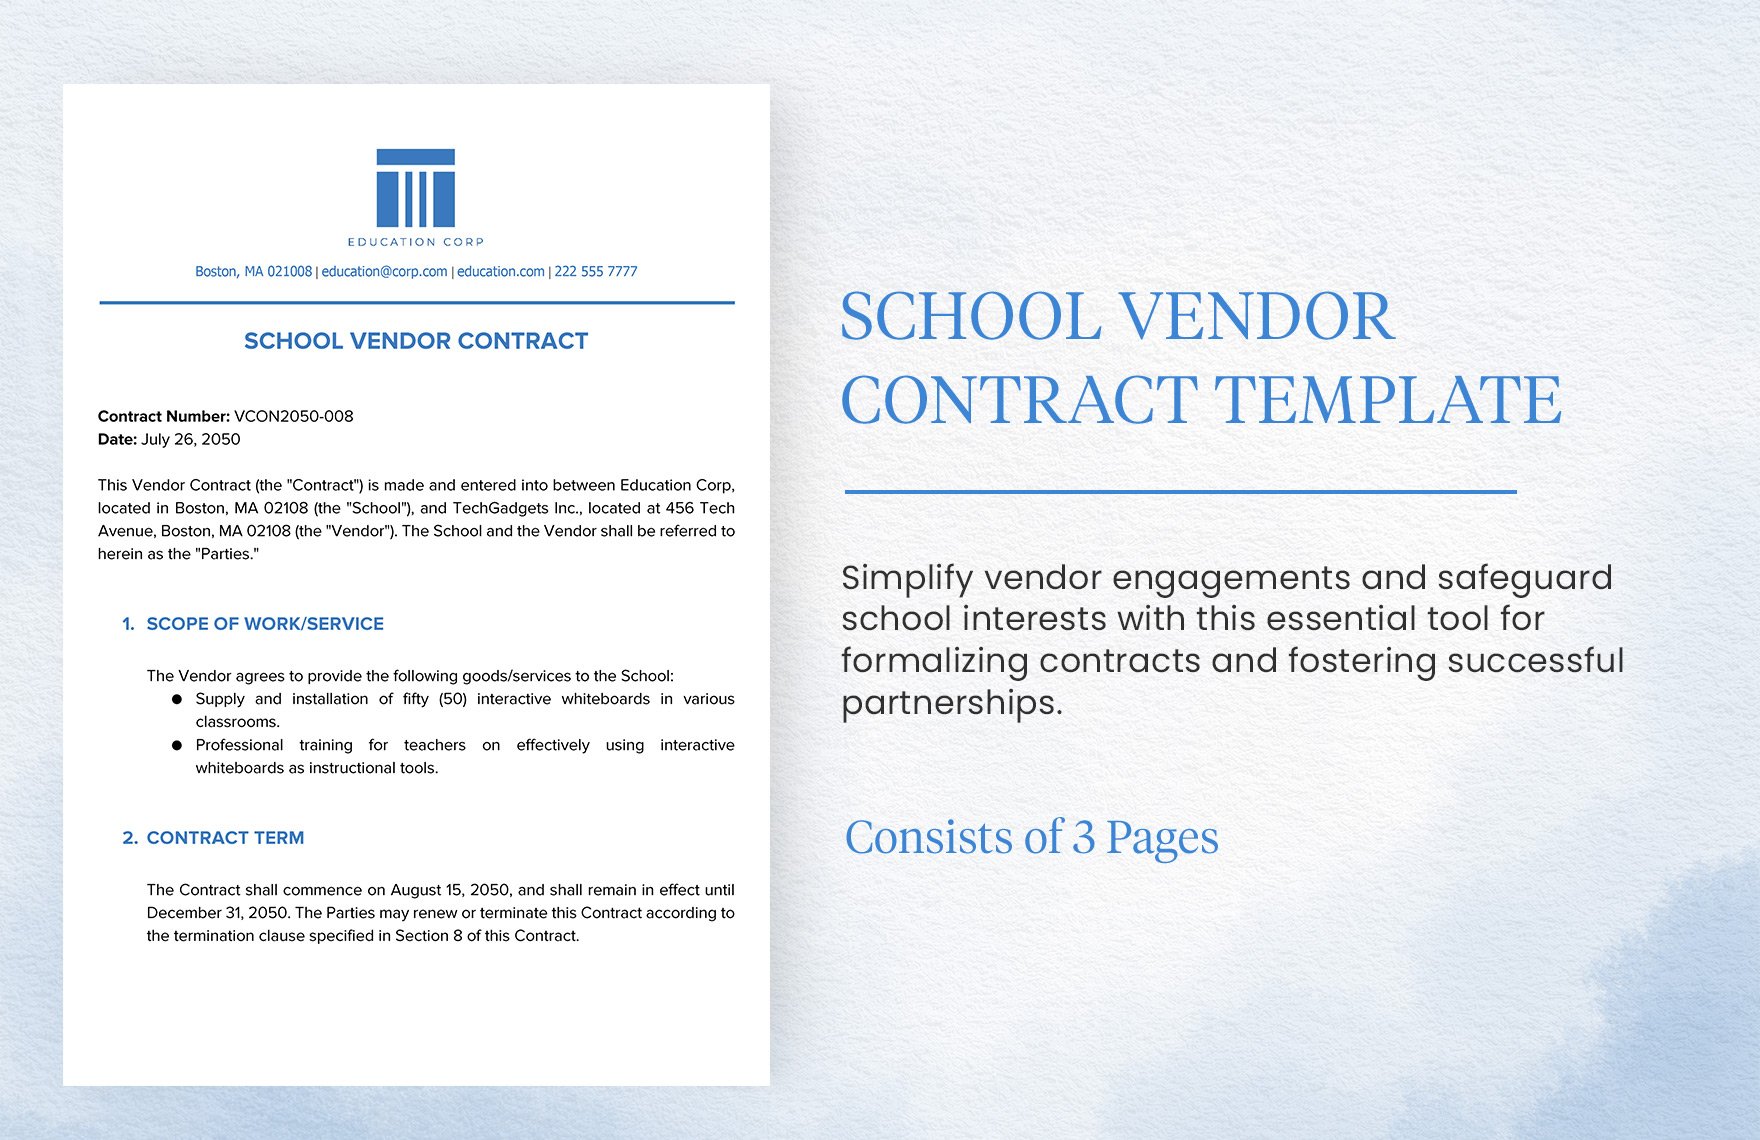 School Vendor Contract Template  in Word, Google Docs, PDF